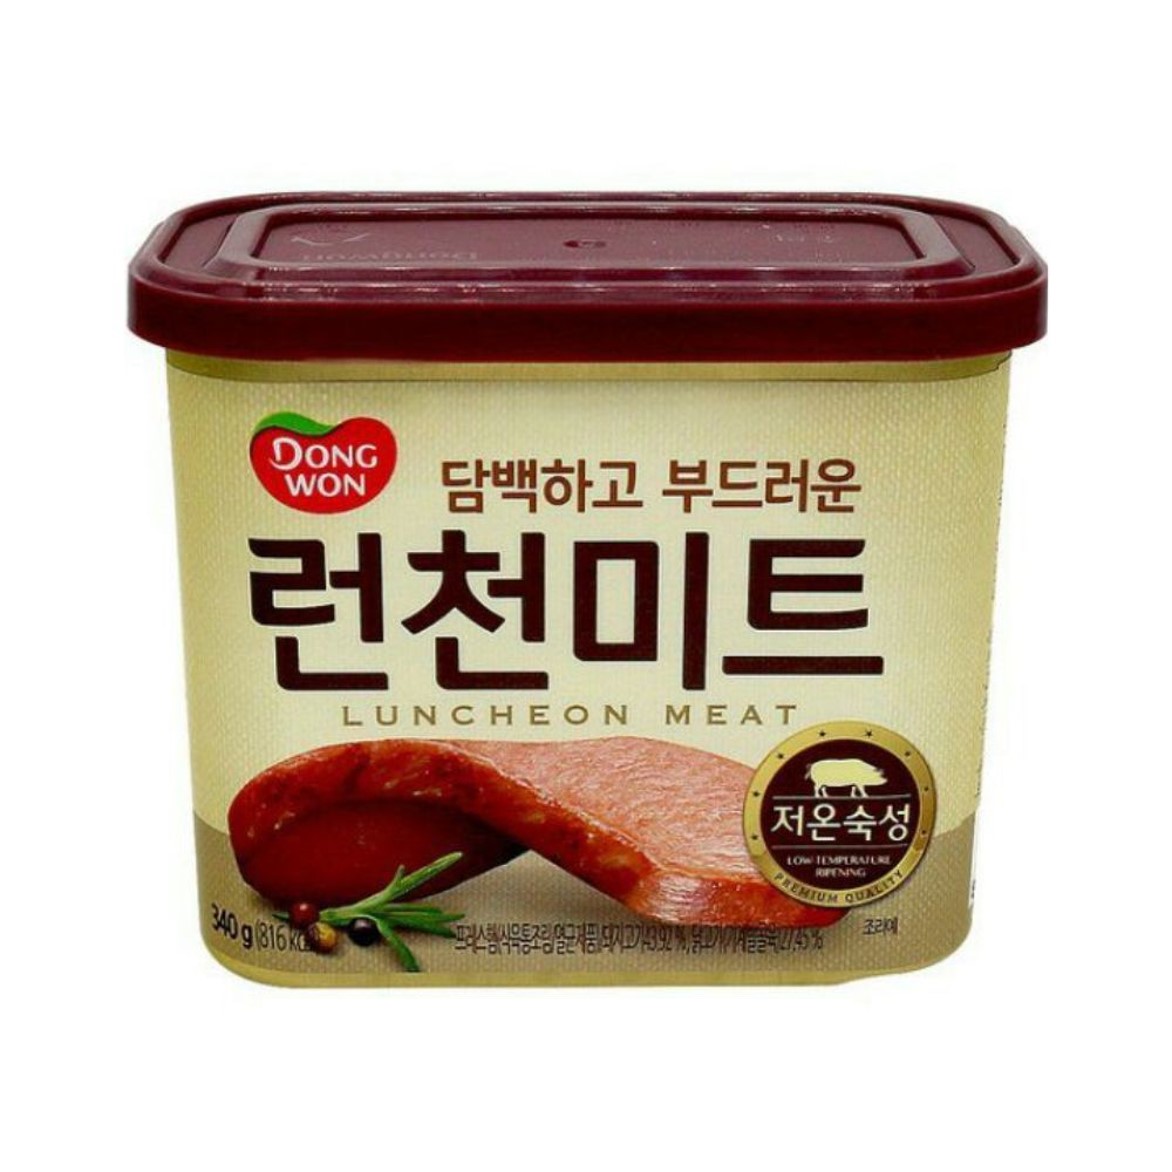 Dongwon Luncheon Meat (Korea Imported) 340g. ดงวอน เนื้อหมูไก่บดกระป๋อง 340กรัม